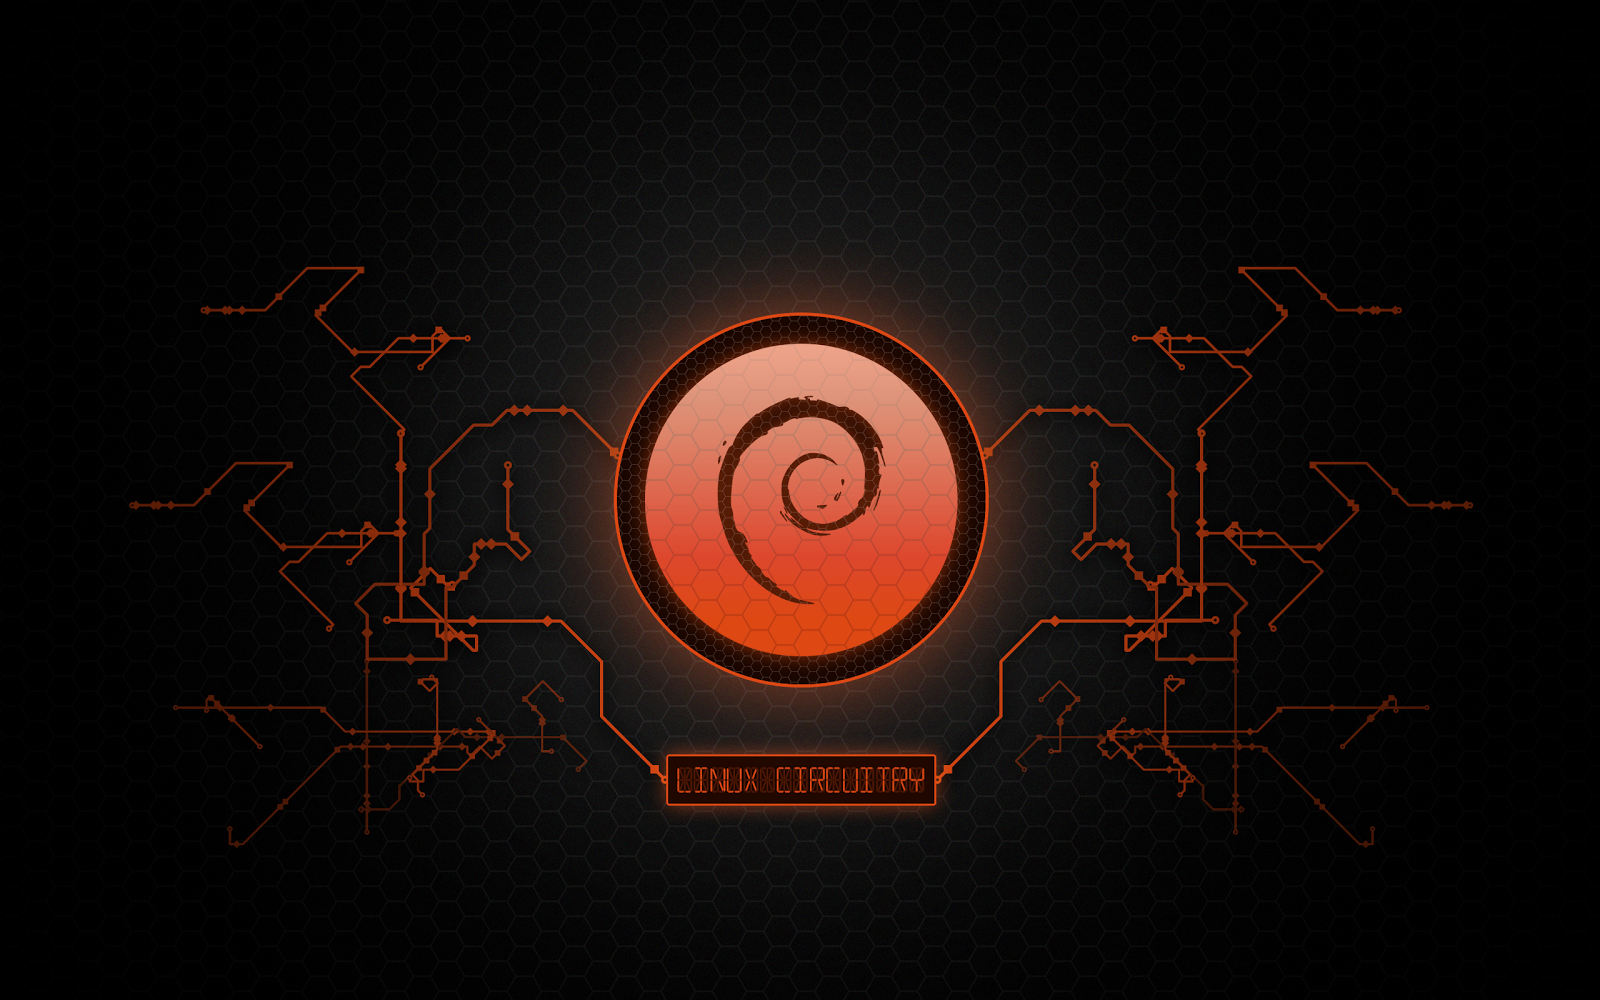 Deskiphotos Debian Linux Wallpaper